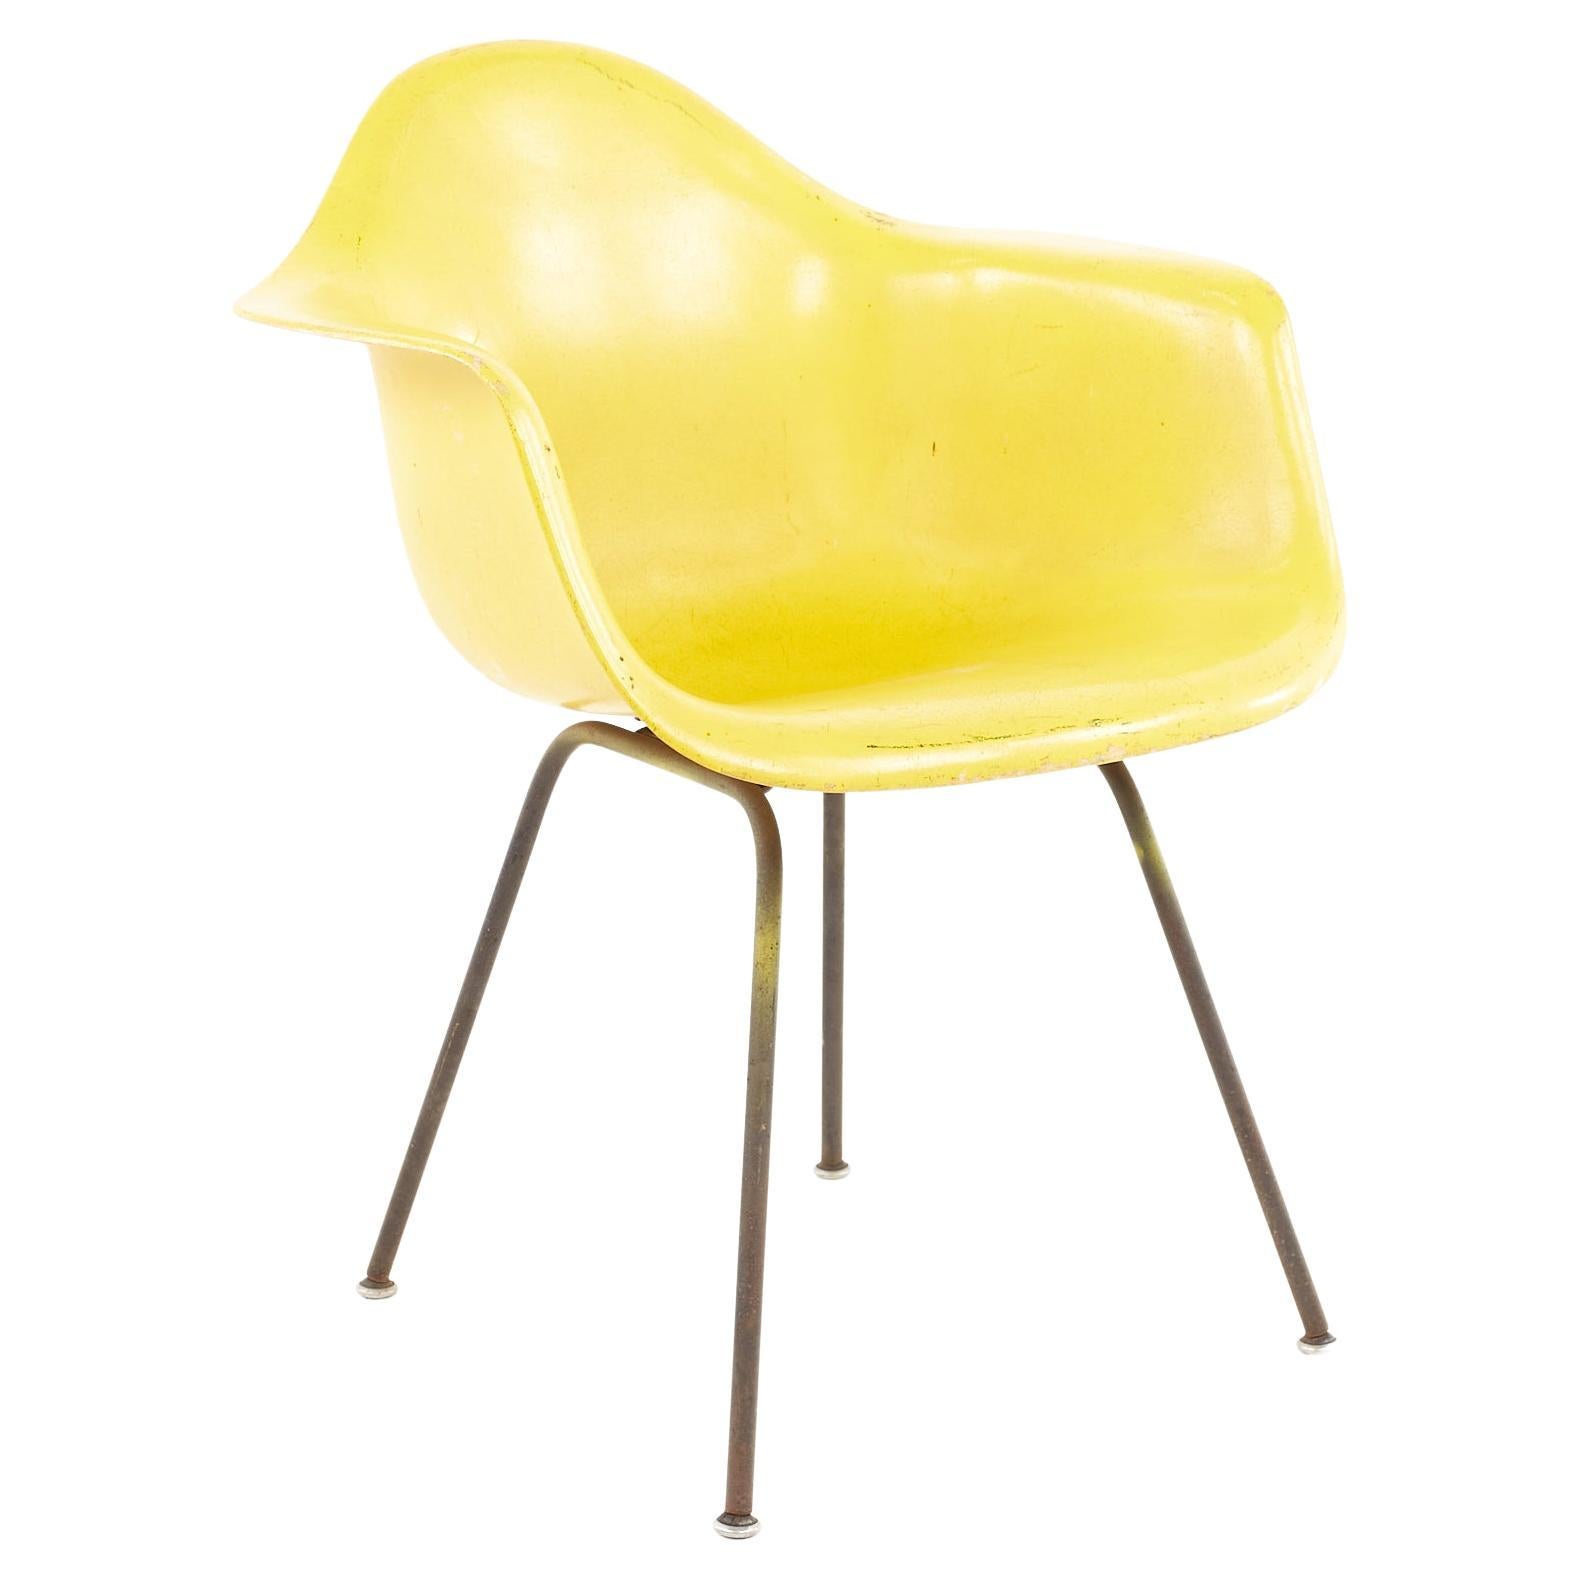 Herman Miller Herman miller chair yellow upholstered chair c1969.H-base vgc.53 yrs old. 